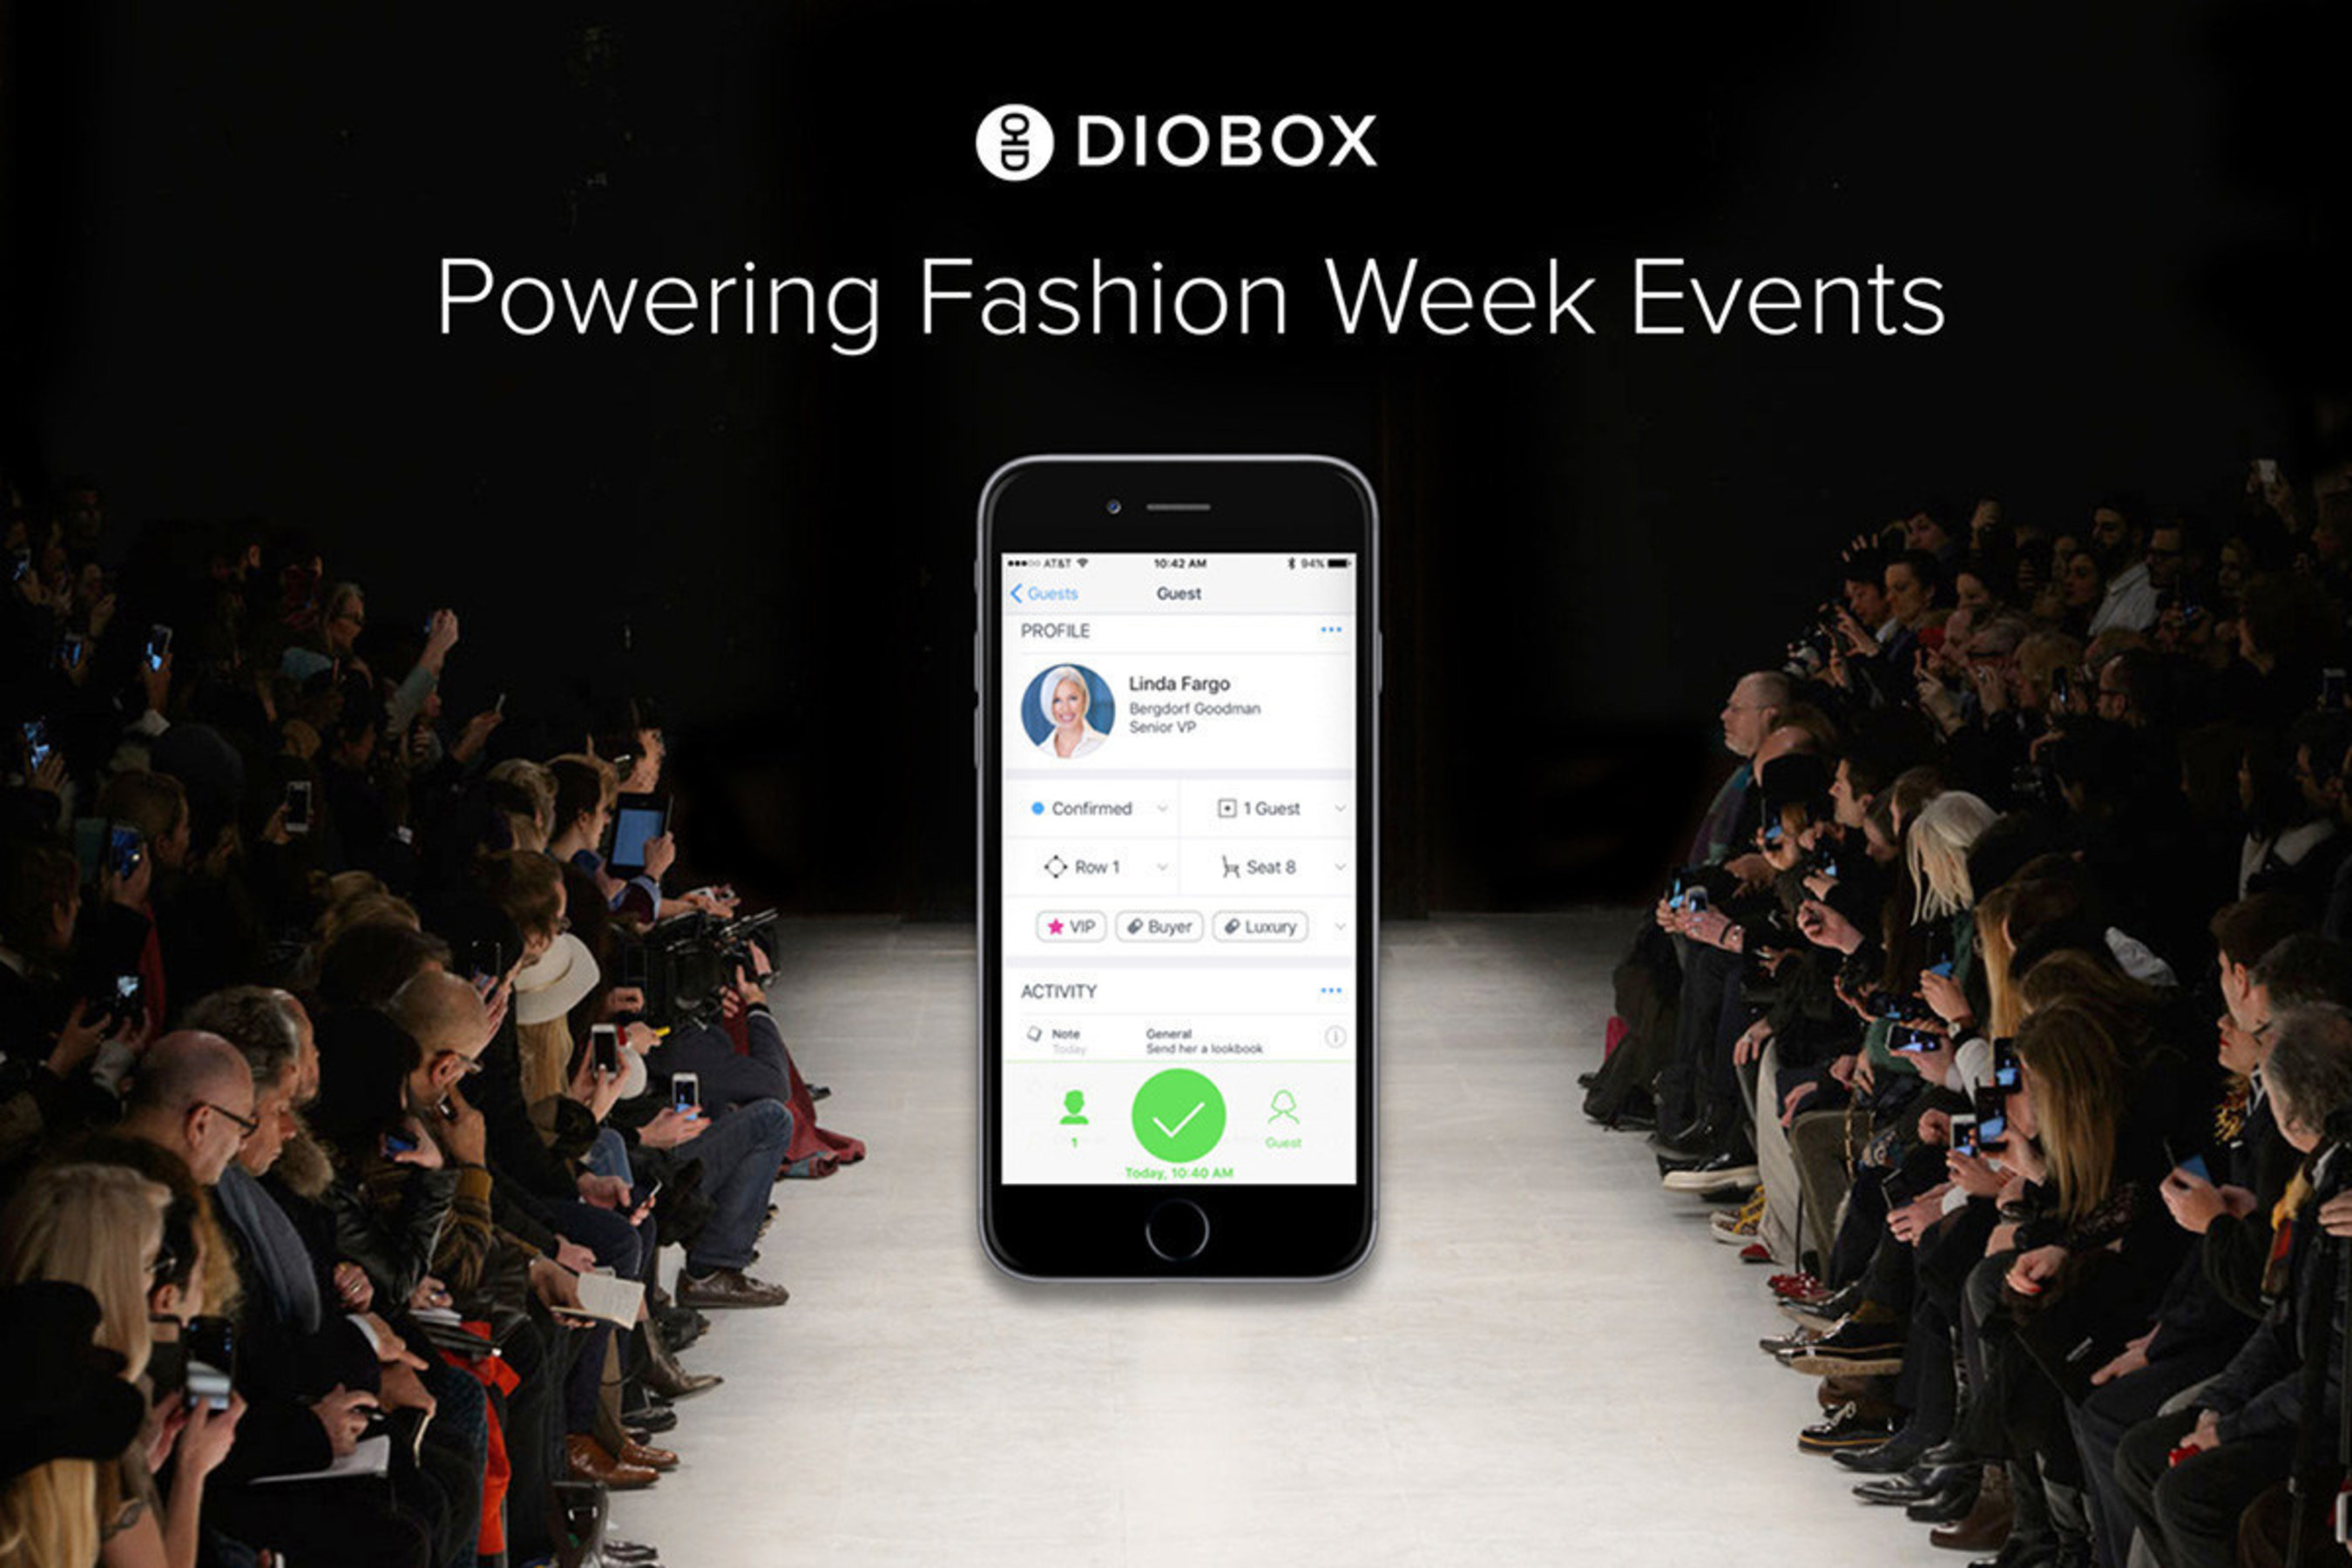 Diobox Powering Fashion Week Events